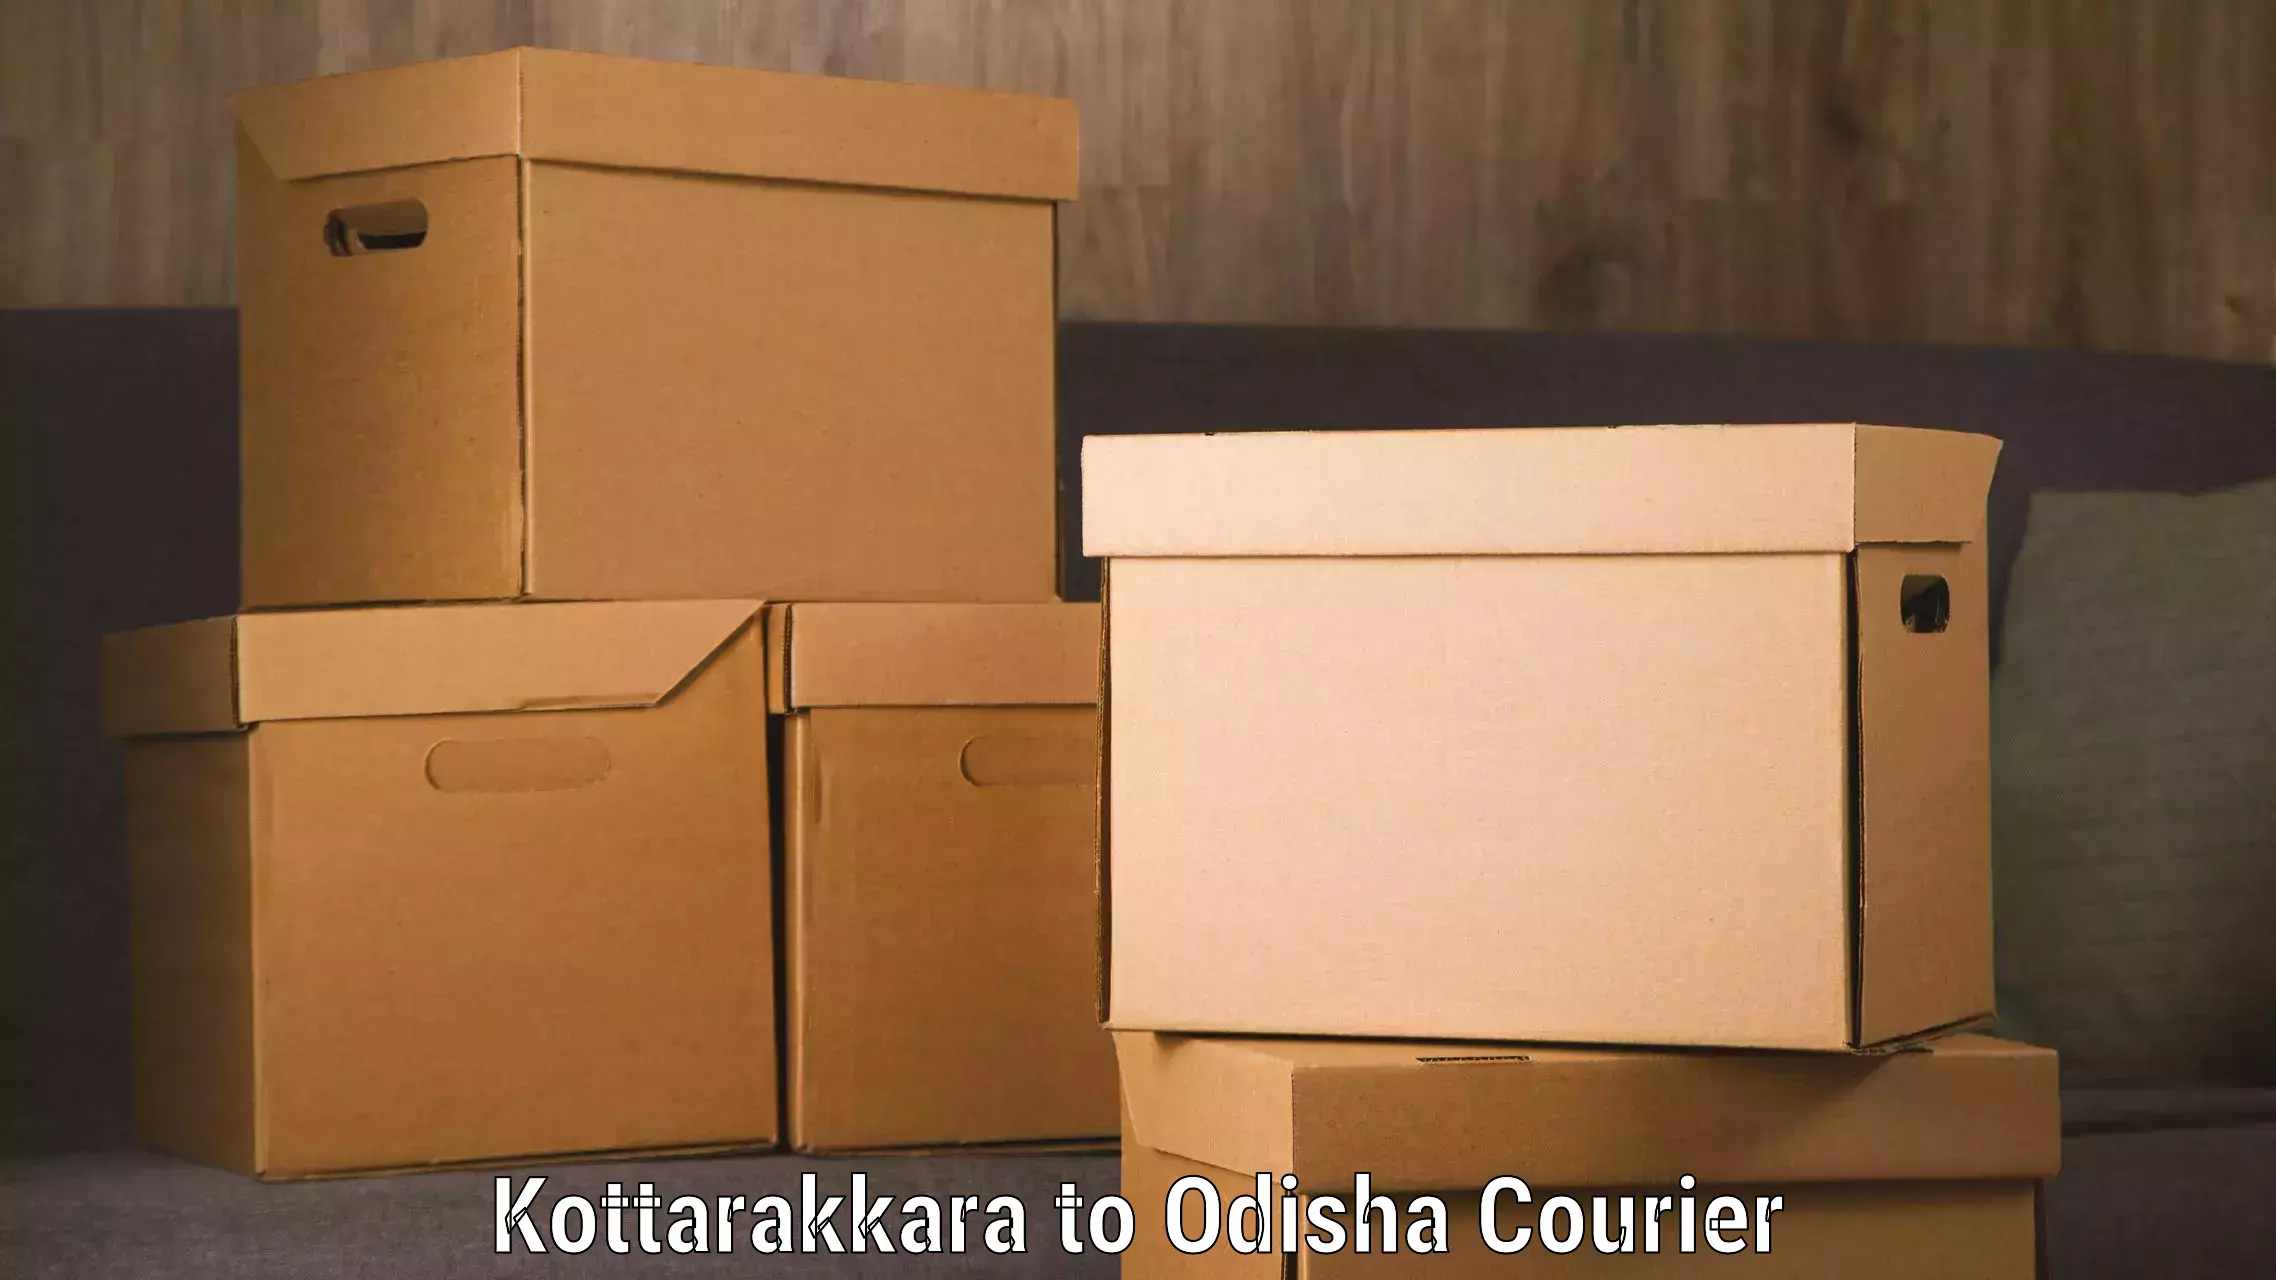 State-of-the-art courier technology Kottarakkara to Odisha